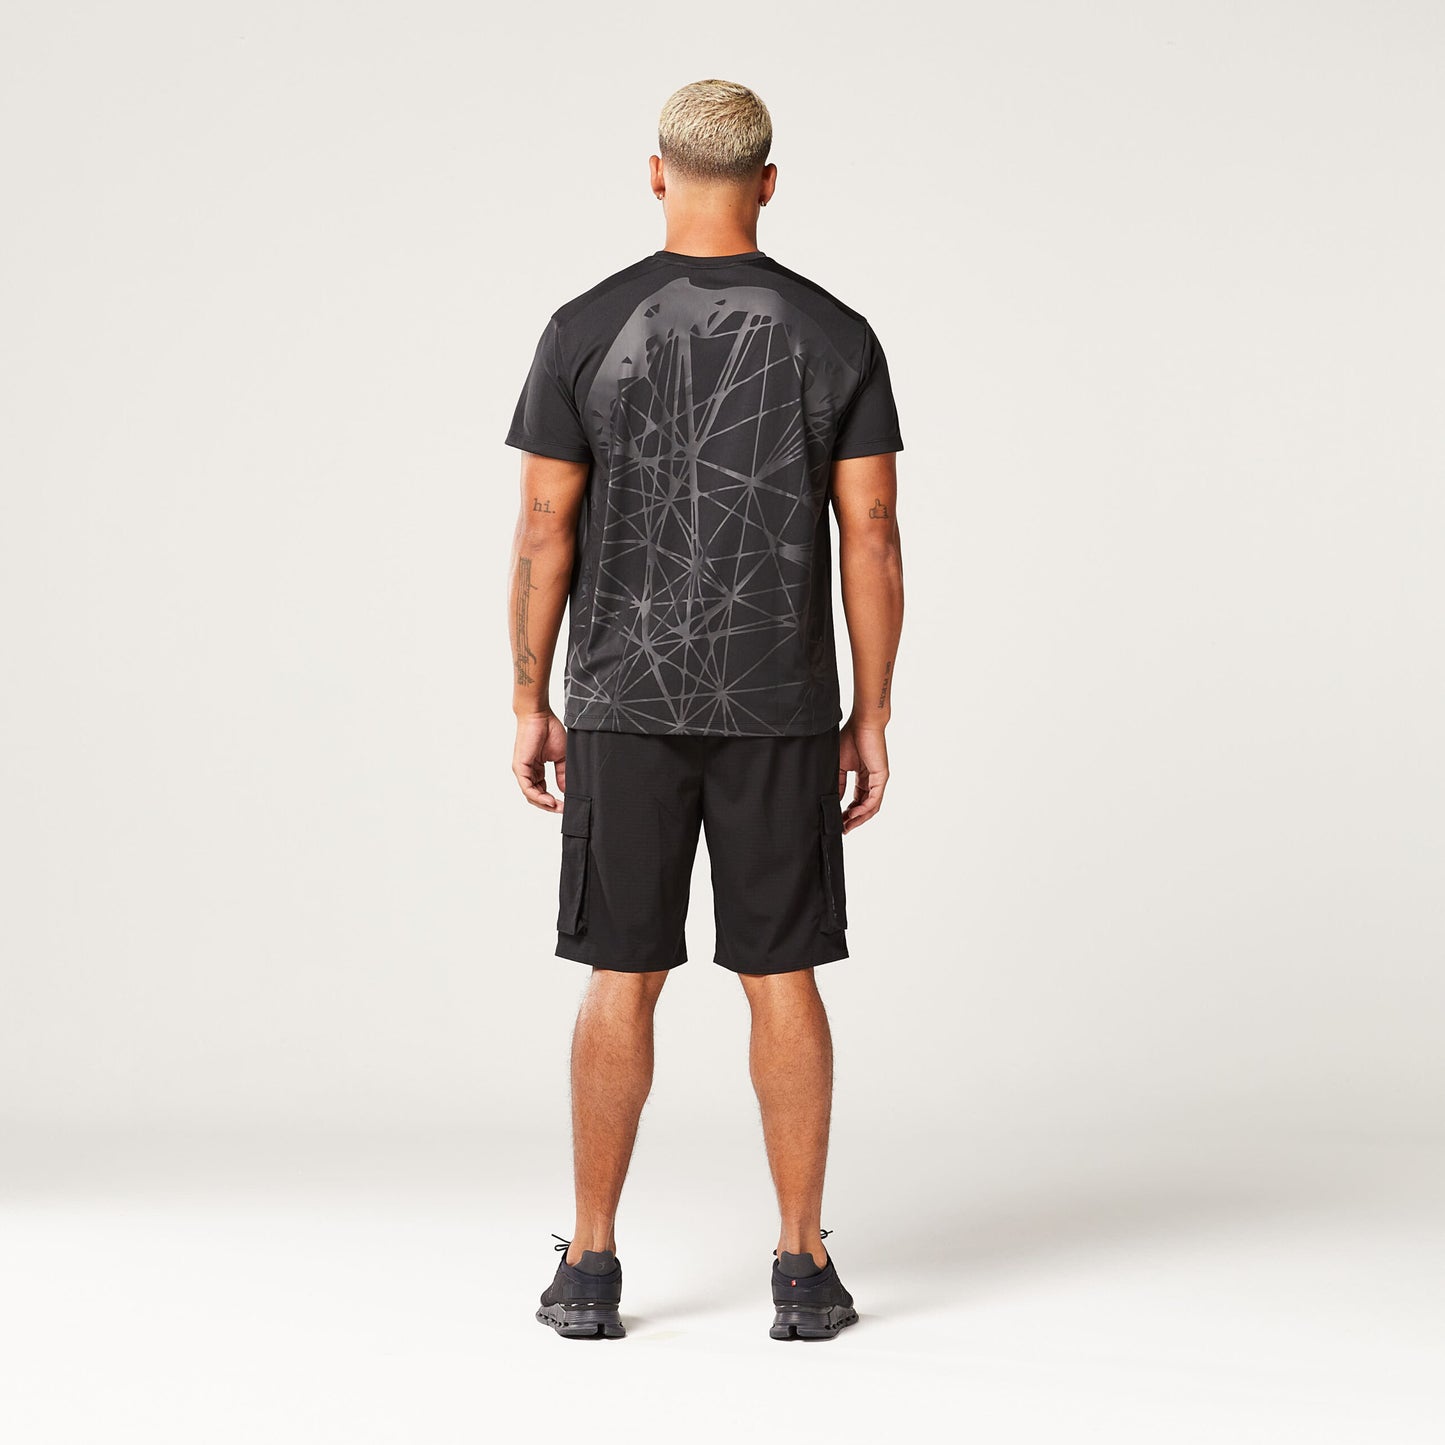 squatwolf-gym-wear-code-urban-tee-black-workout-shirts-for-men